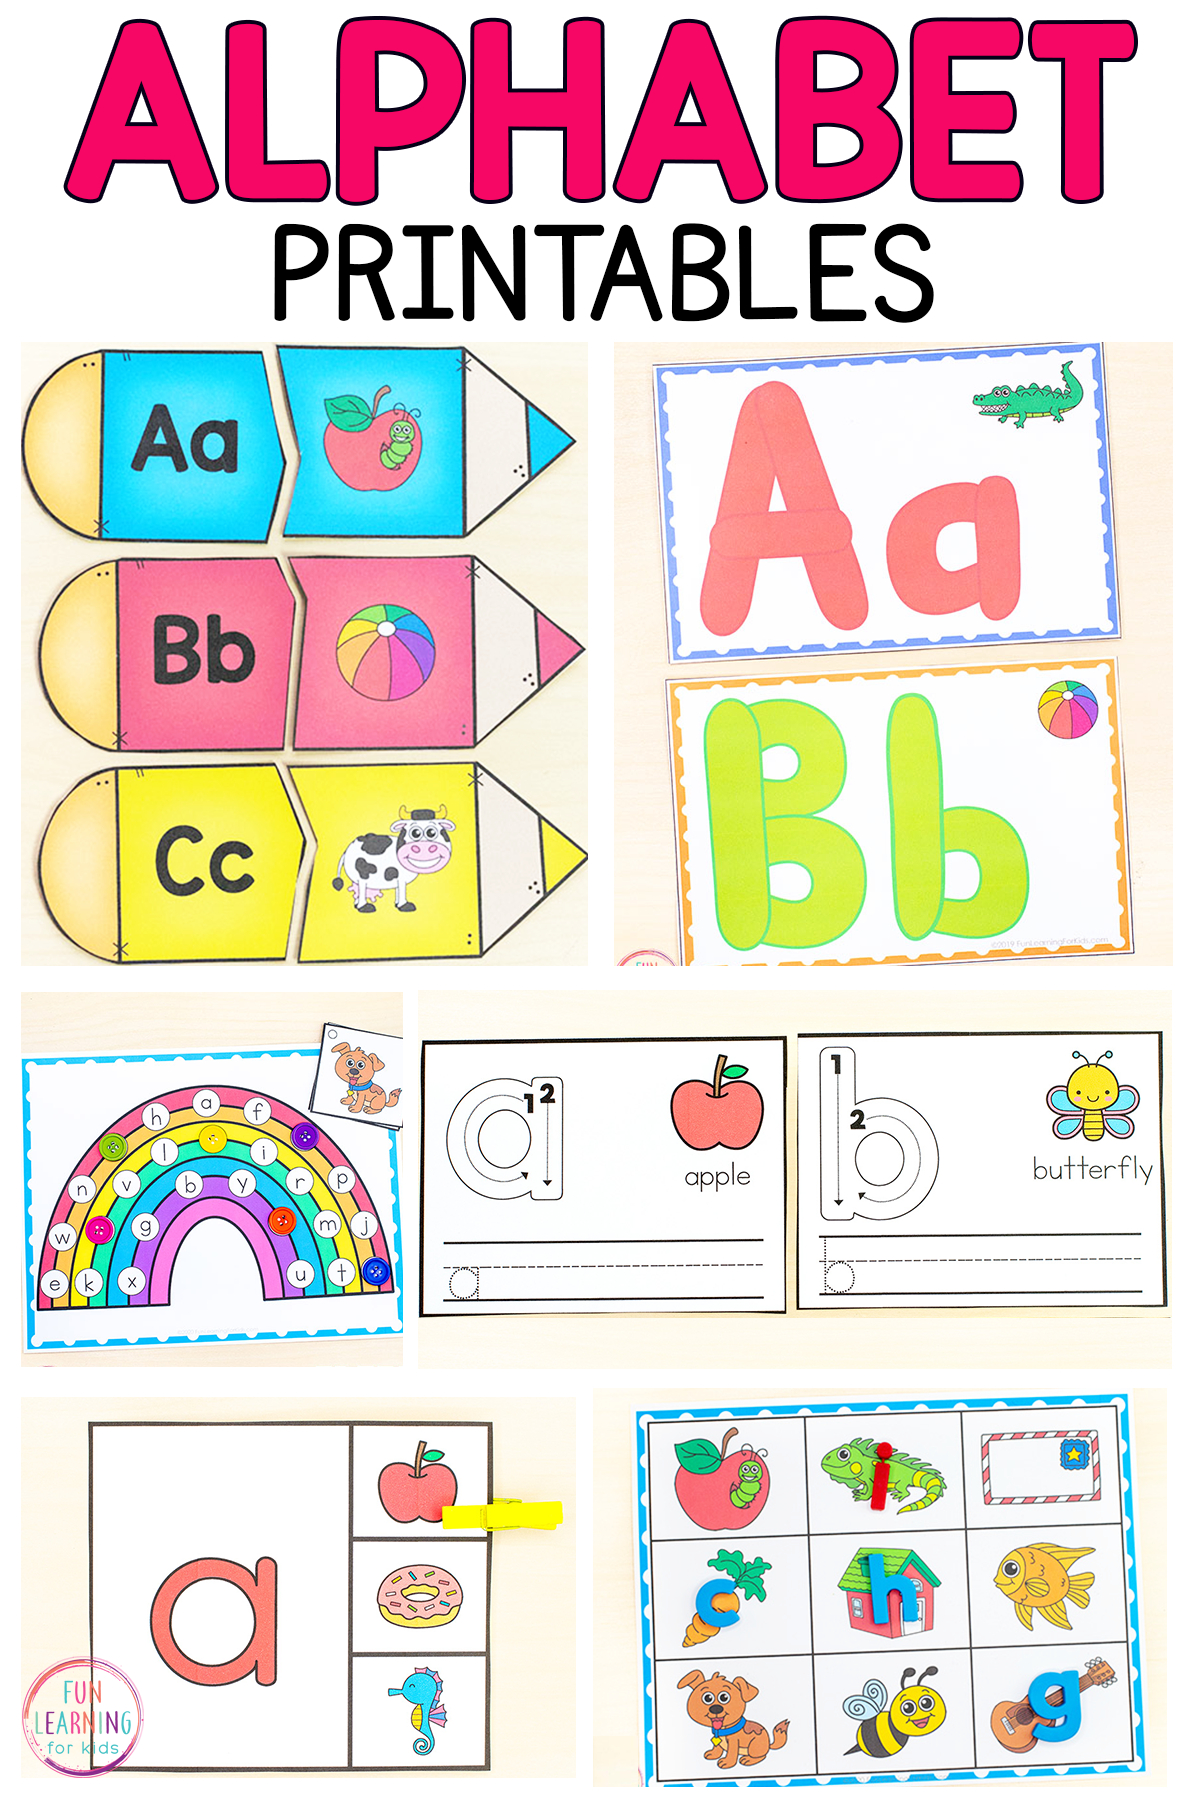 Free Alphabet Printables regarding Free Printable Alphabet Activities For Preschoolers